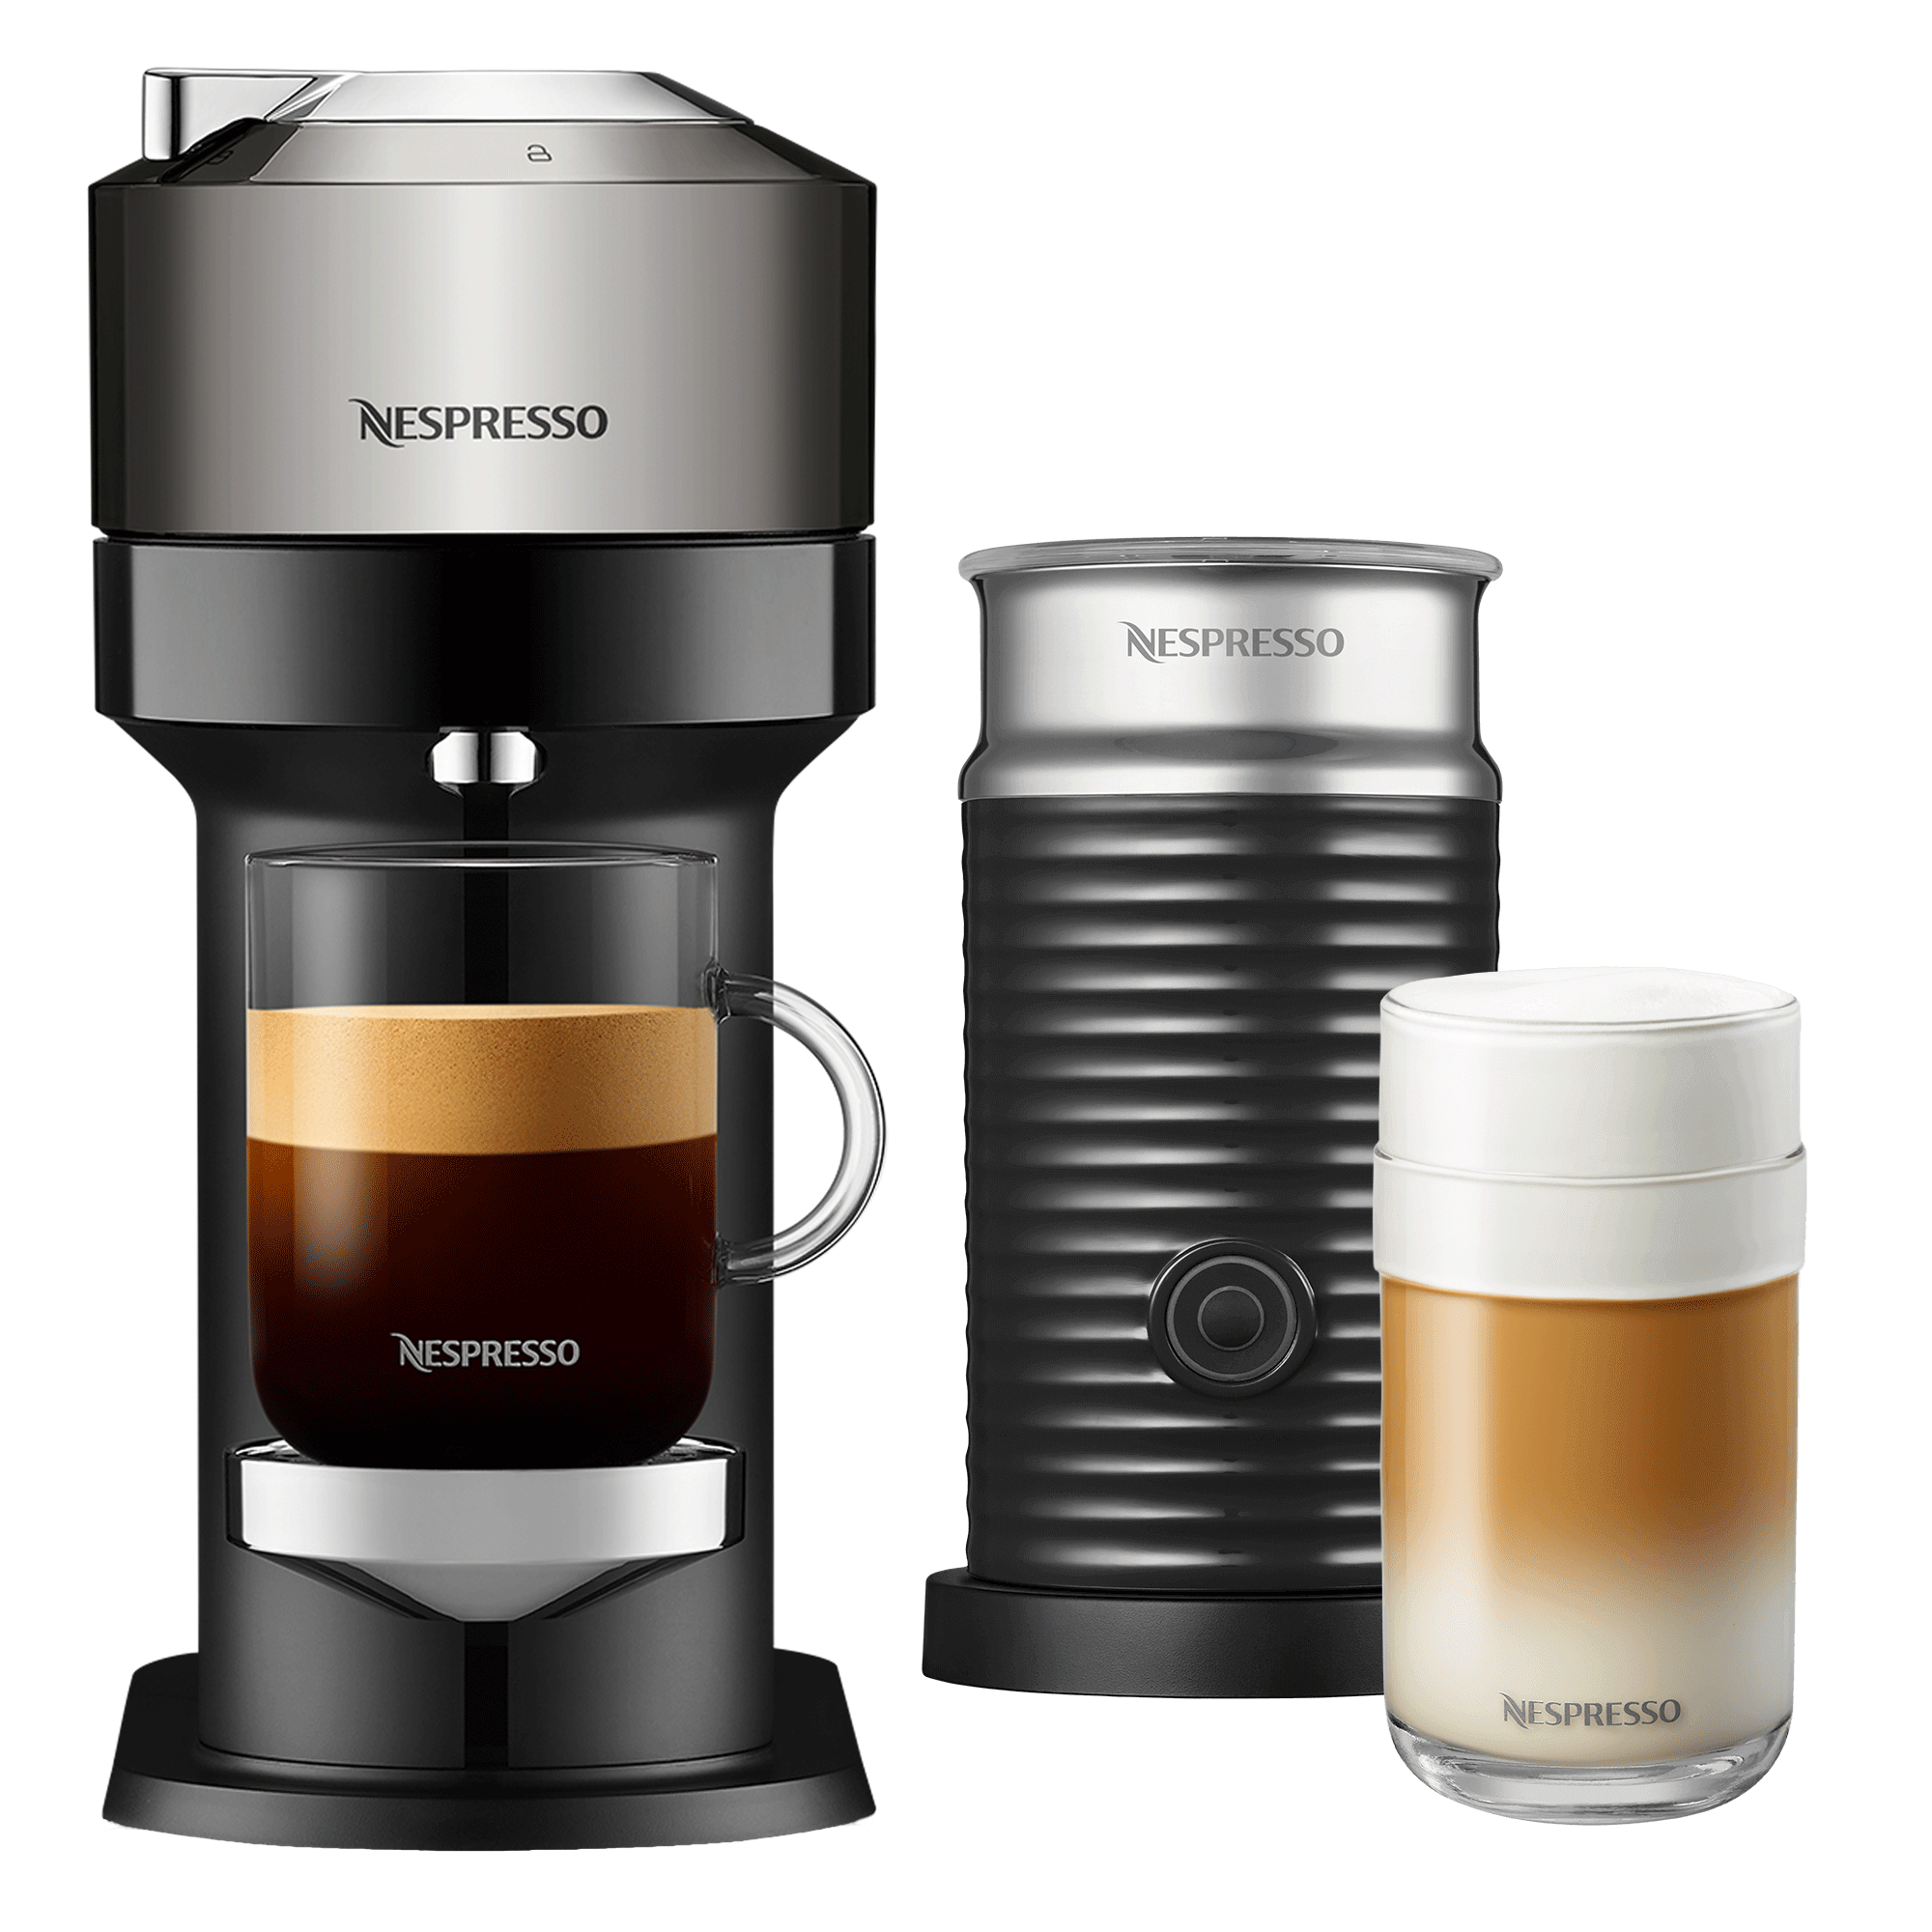 Vertuo Next Deluxe Chrome & Milk Frother Bundle, Vertuo Coffee Machine